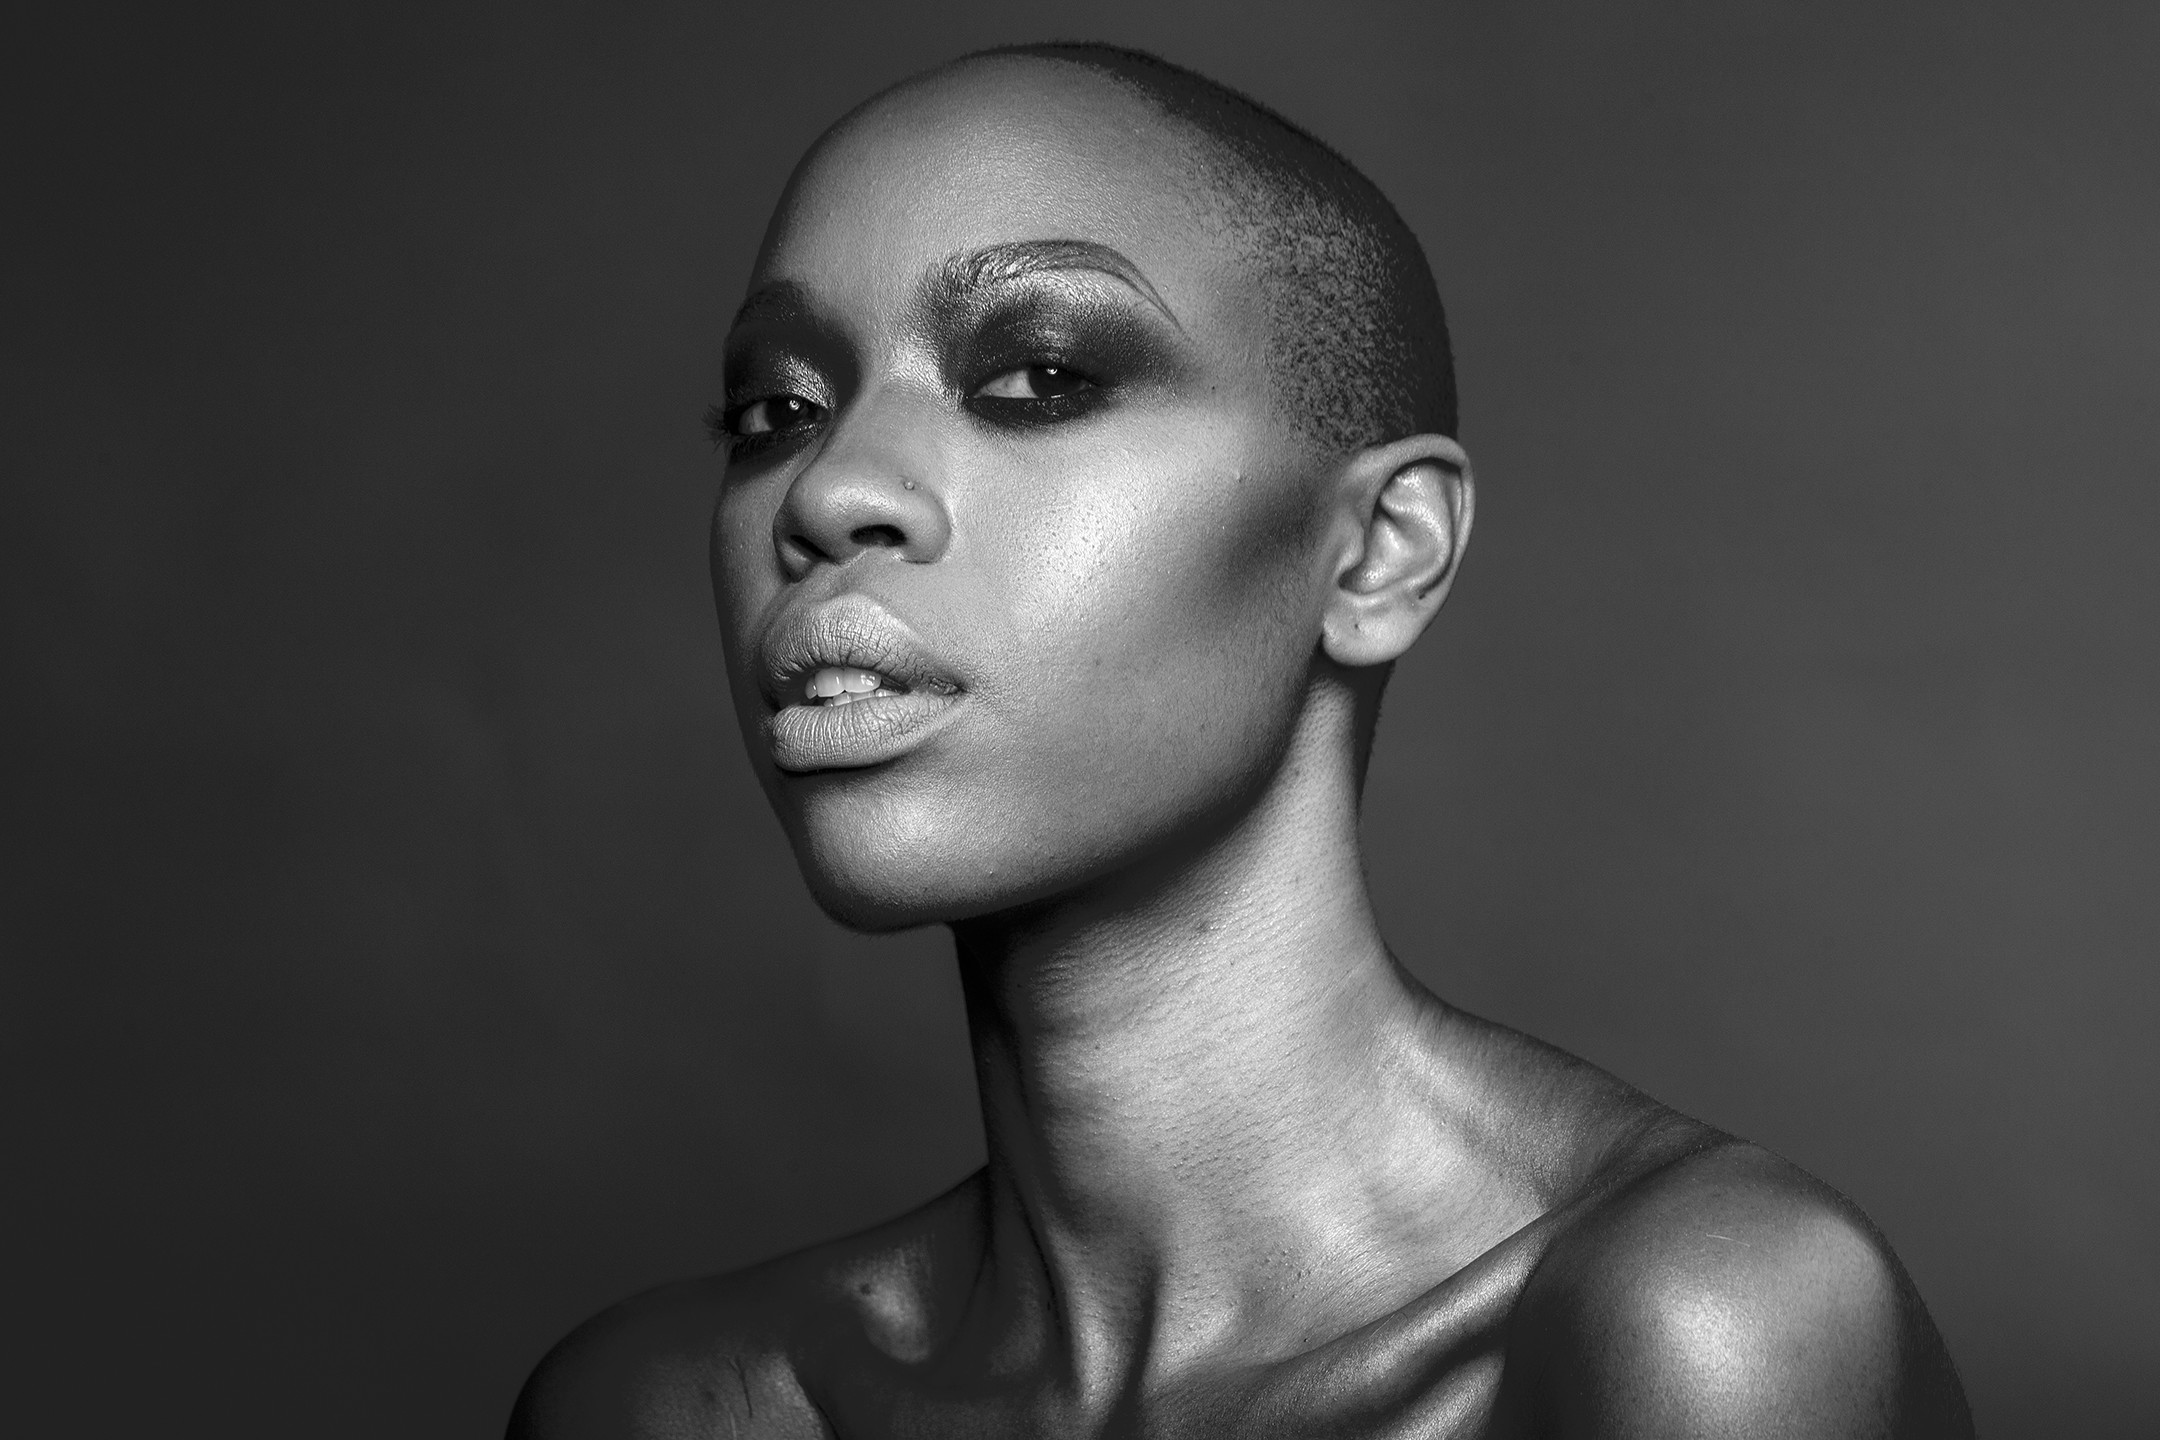 ModelMayhem.com - RAW Editorial African Beauty Images